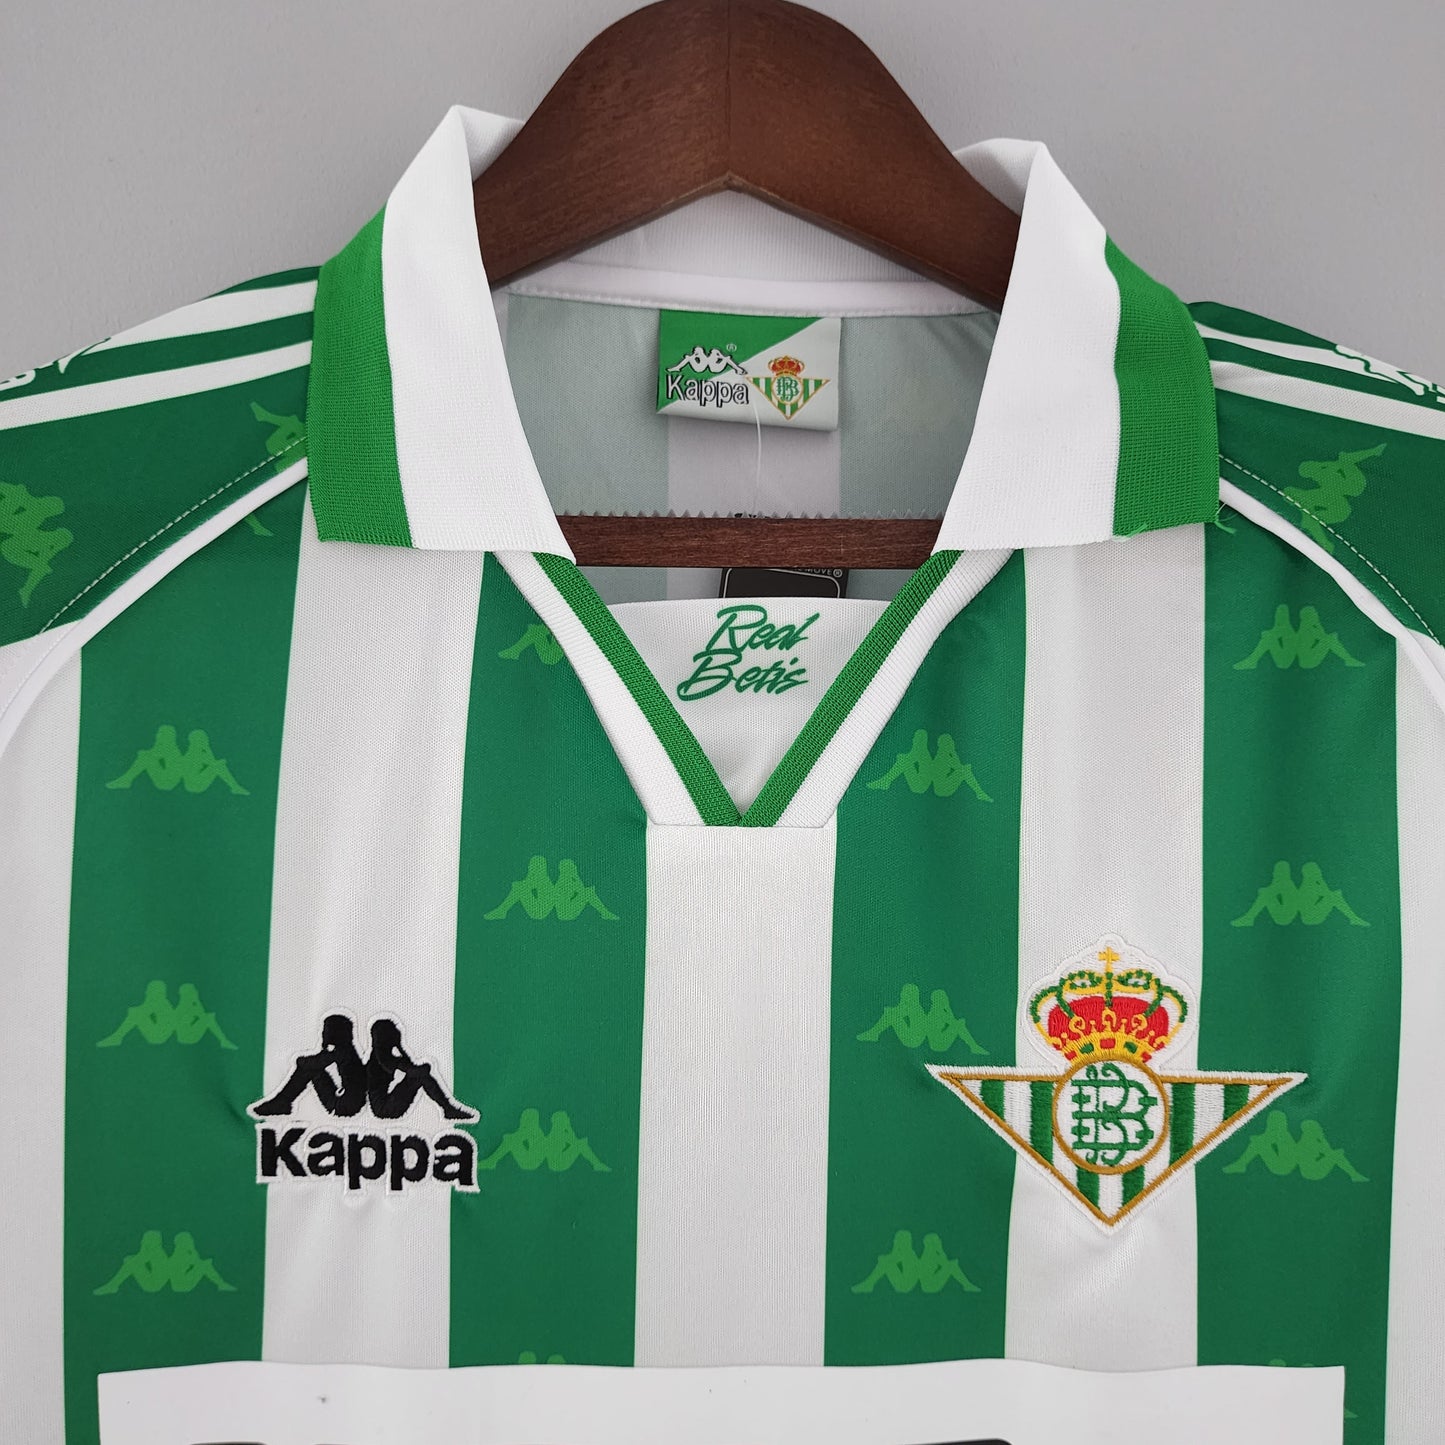 Real Betis 96/97 Local | Retro